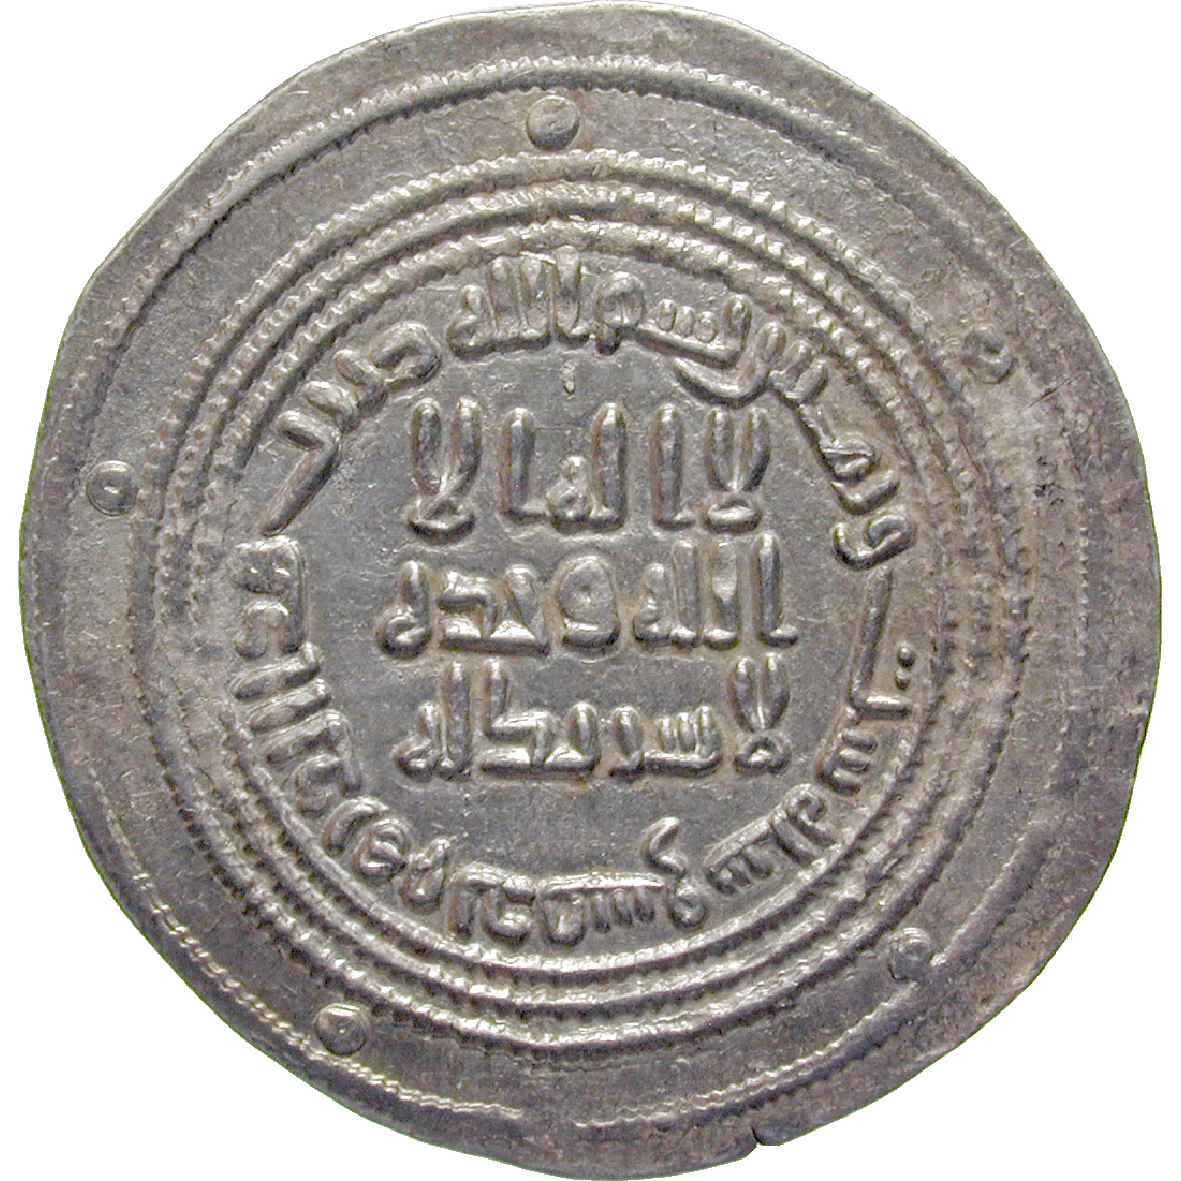 Umayyad Empire, Abd al-Malik, Dirham 86 AH (obverse)